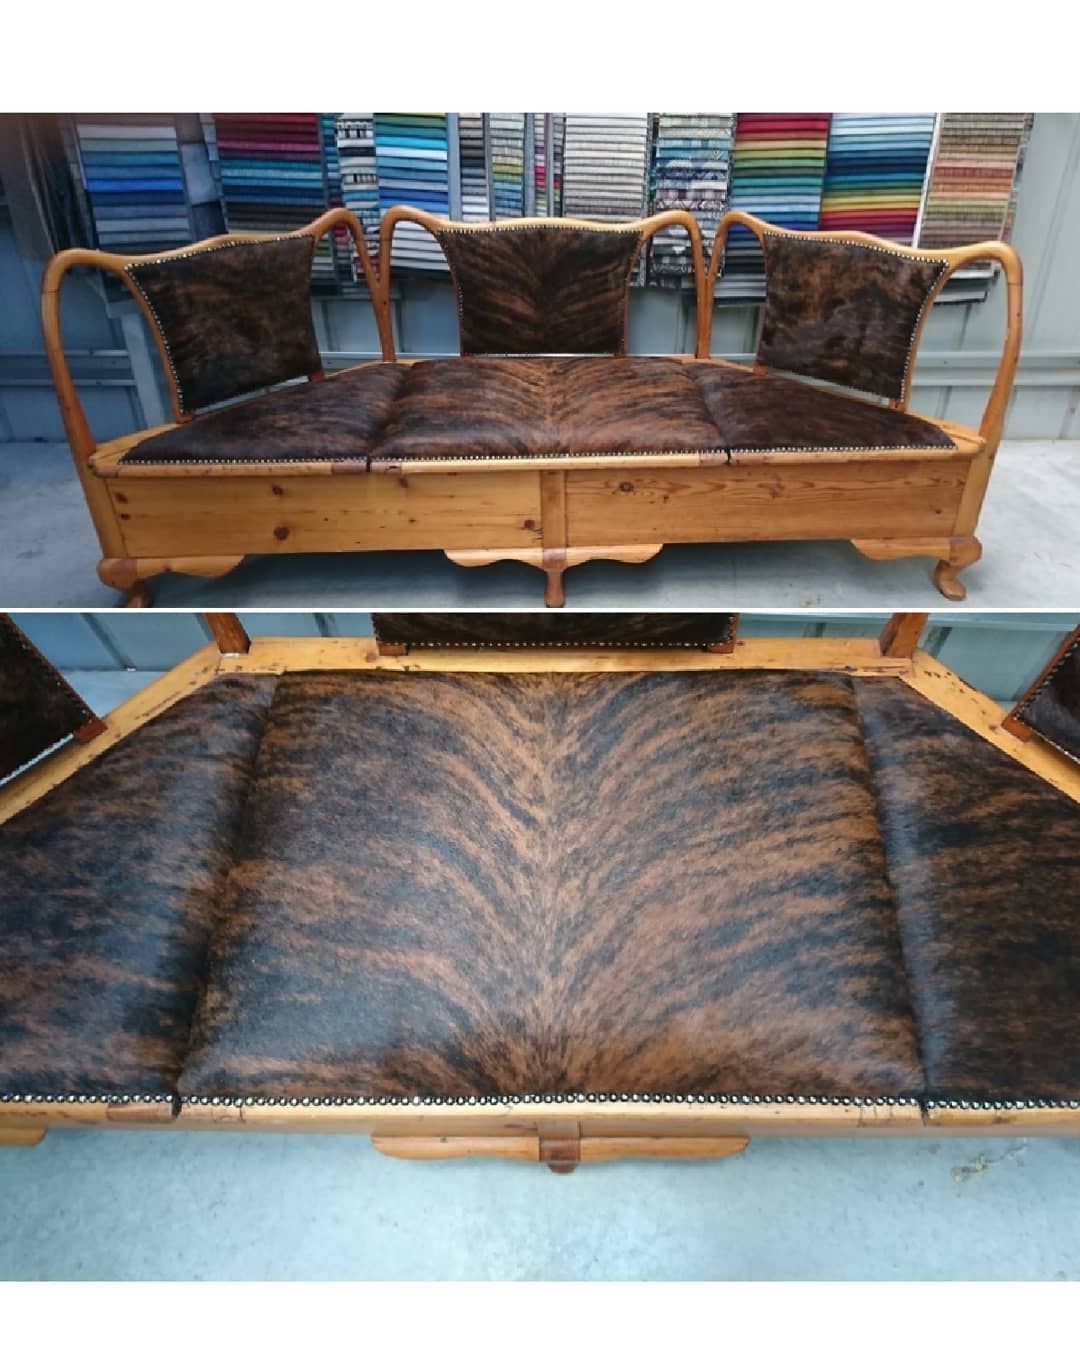 robert_langham_upholstery_Launceston Upholstery cowhide furniture